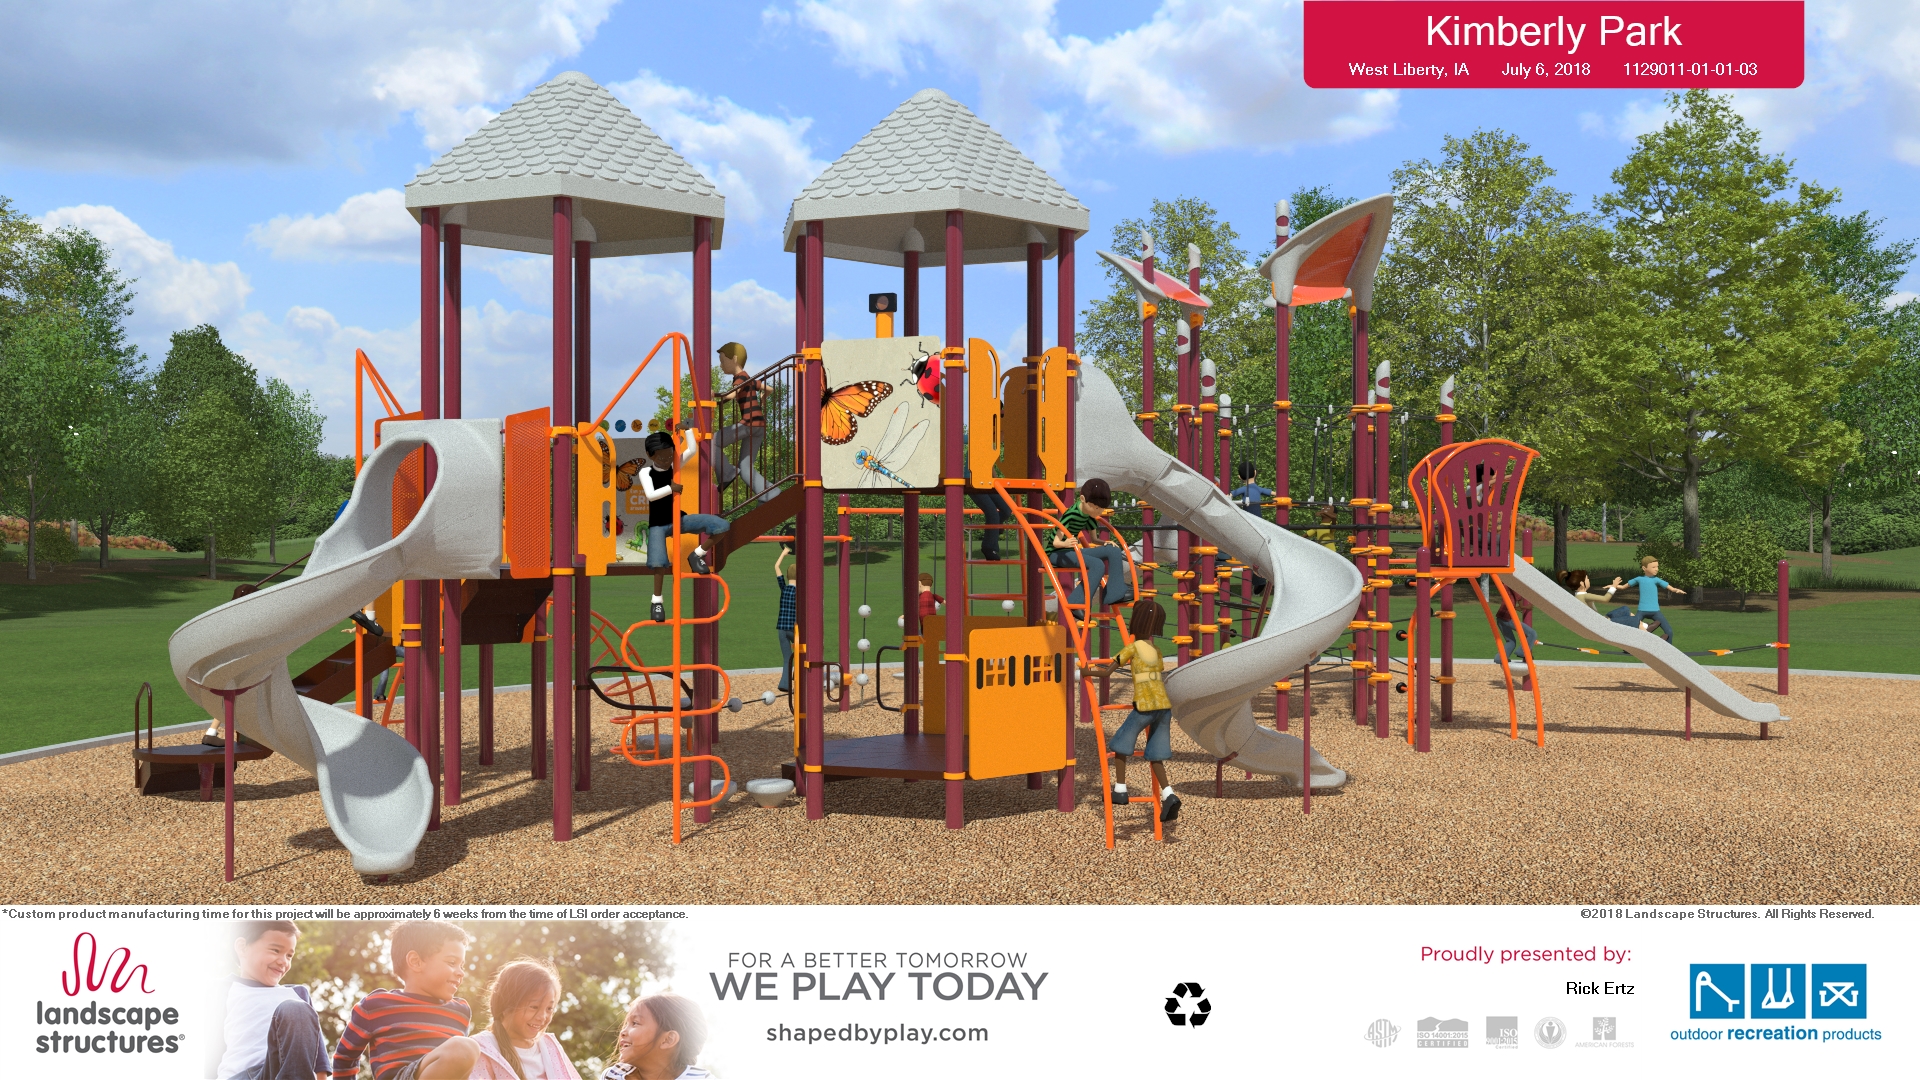 City of West Liberty Kimberly Park Playground